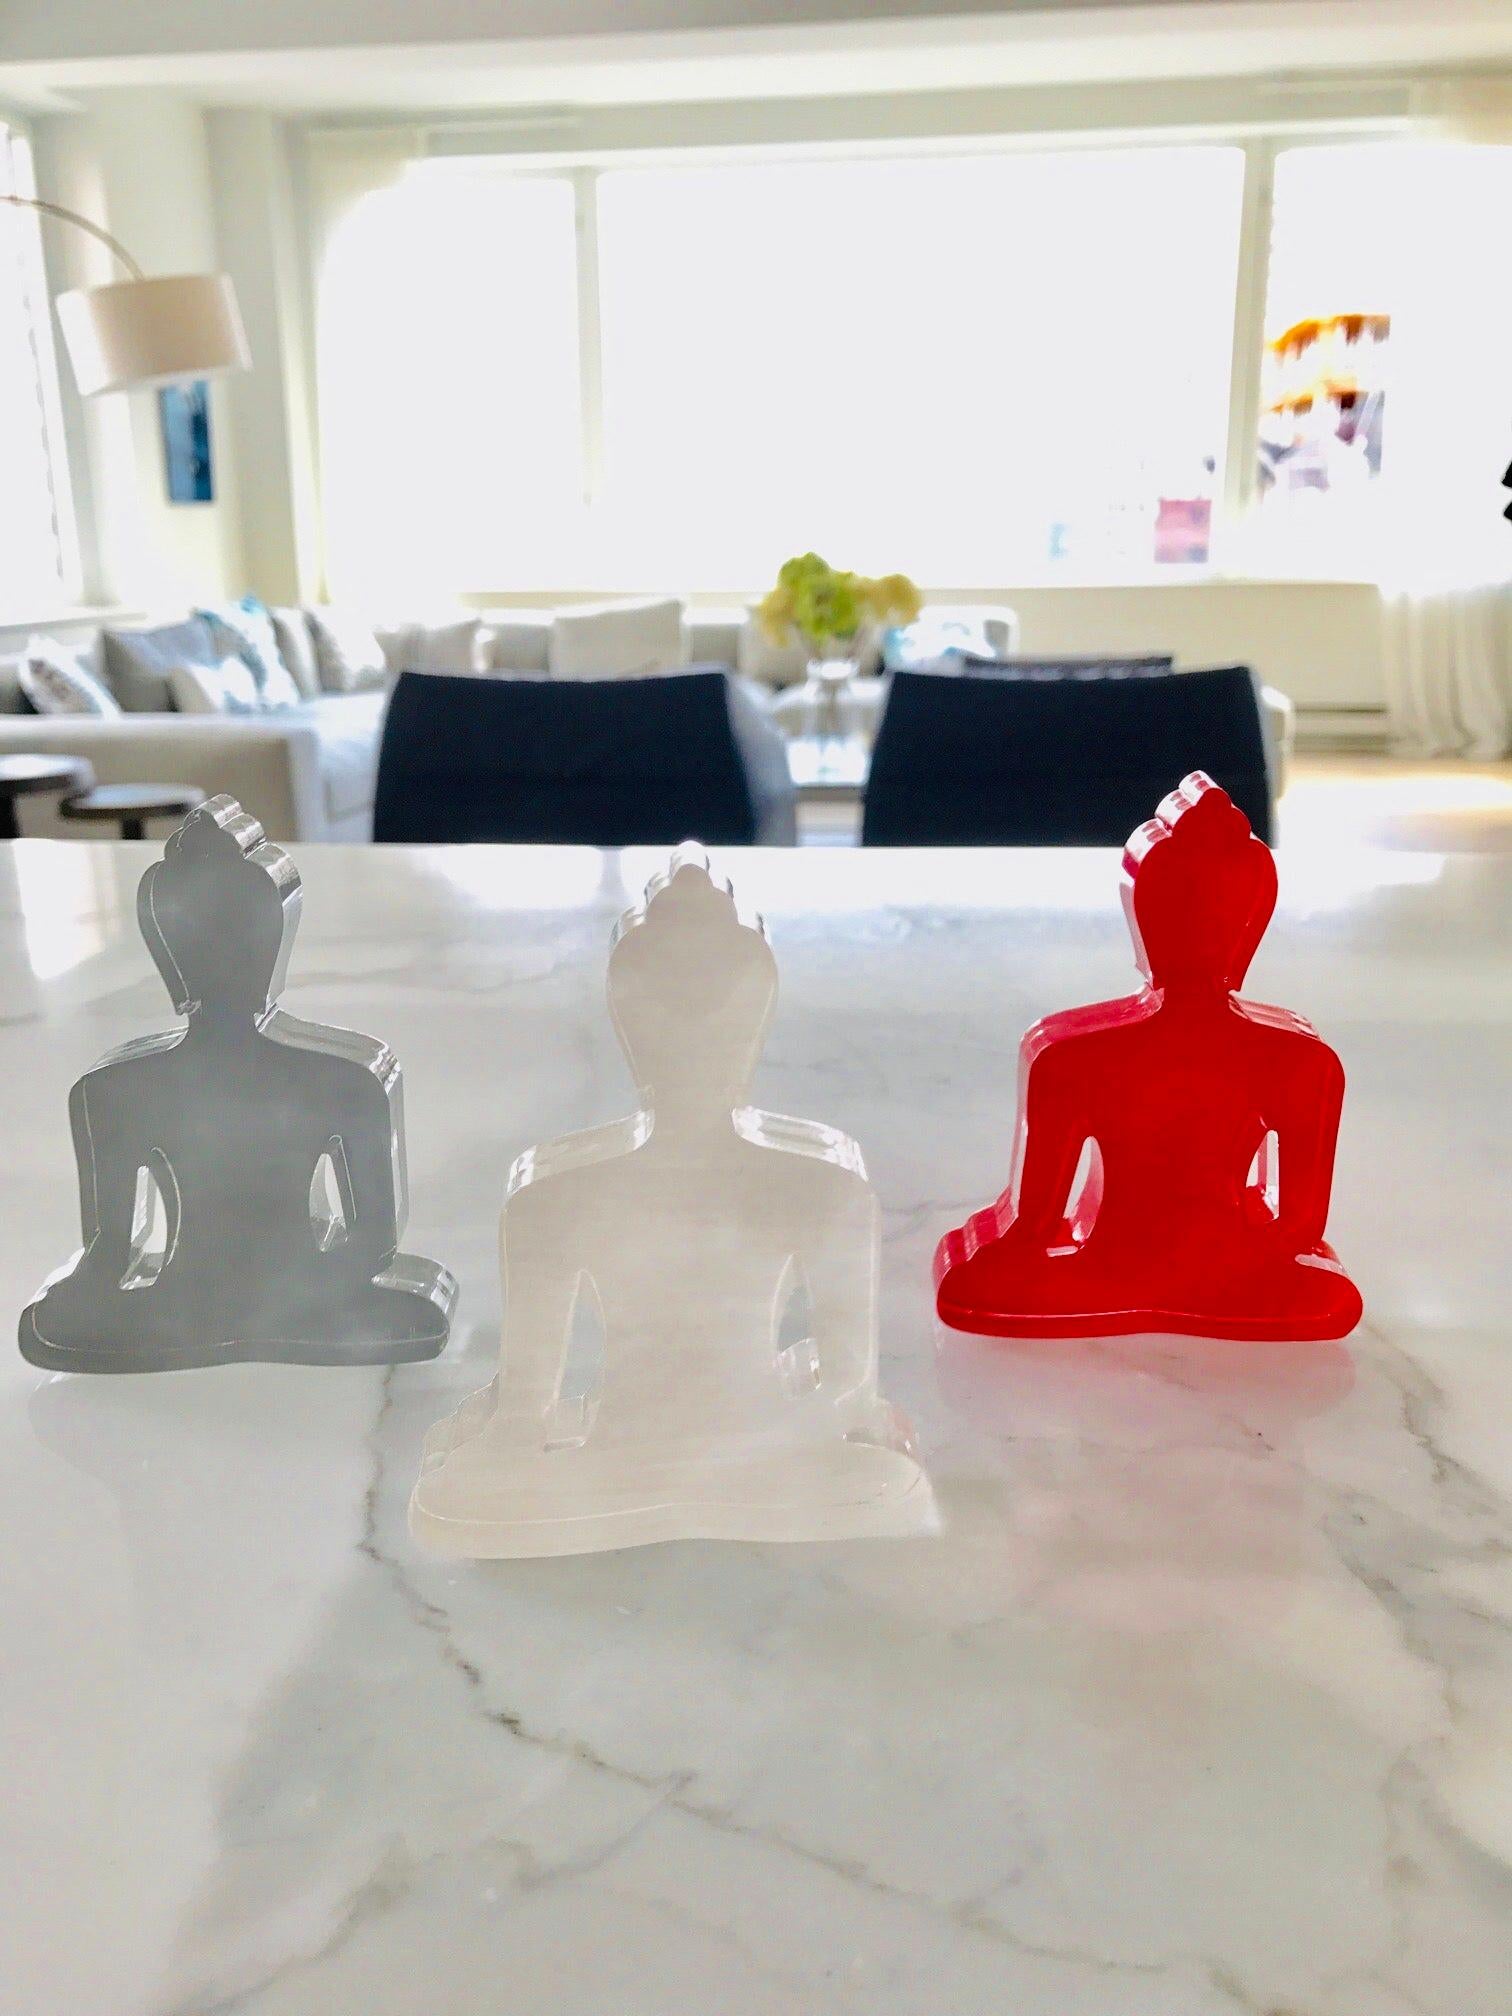 Three Buddhas - White, Red and Grey Buddha sculptures